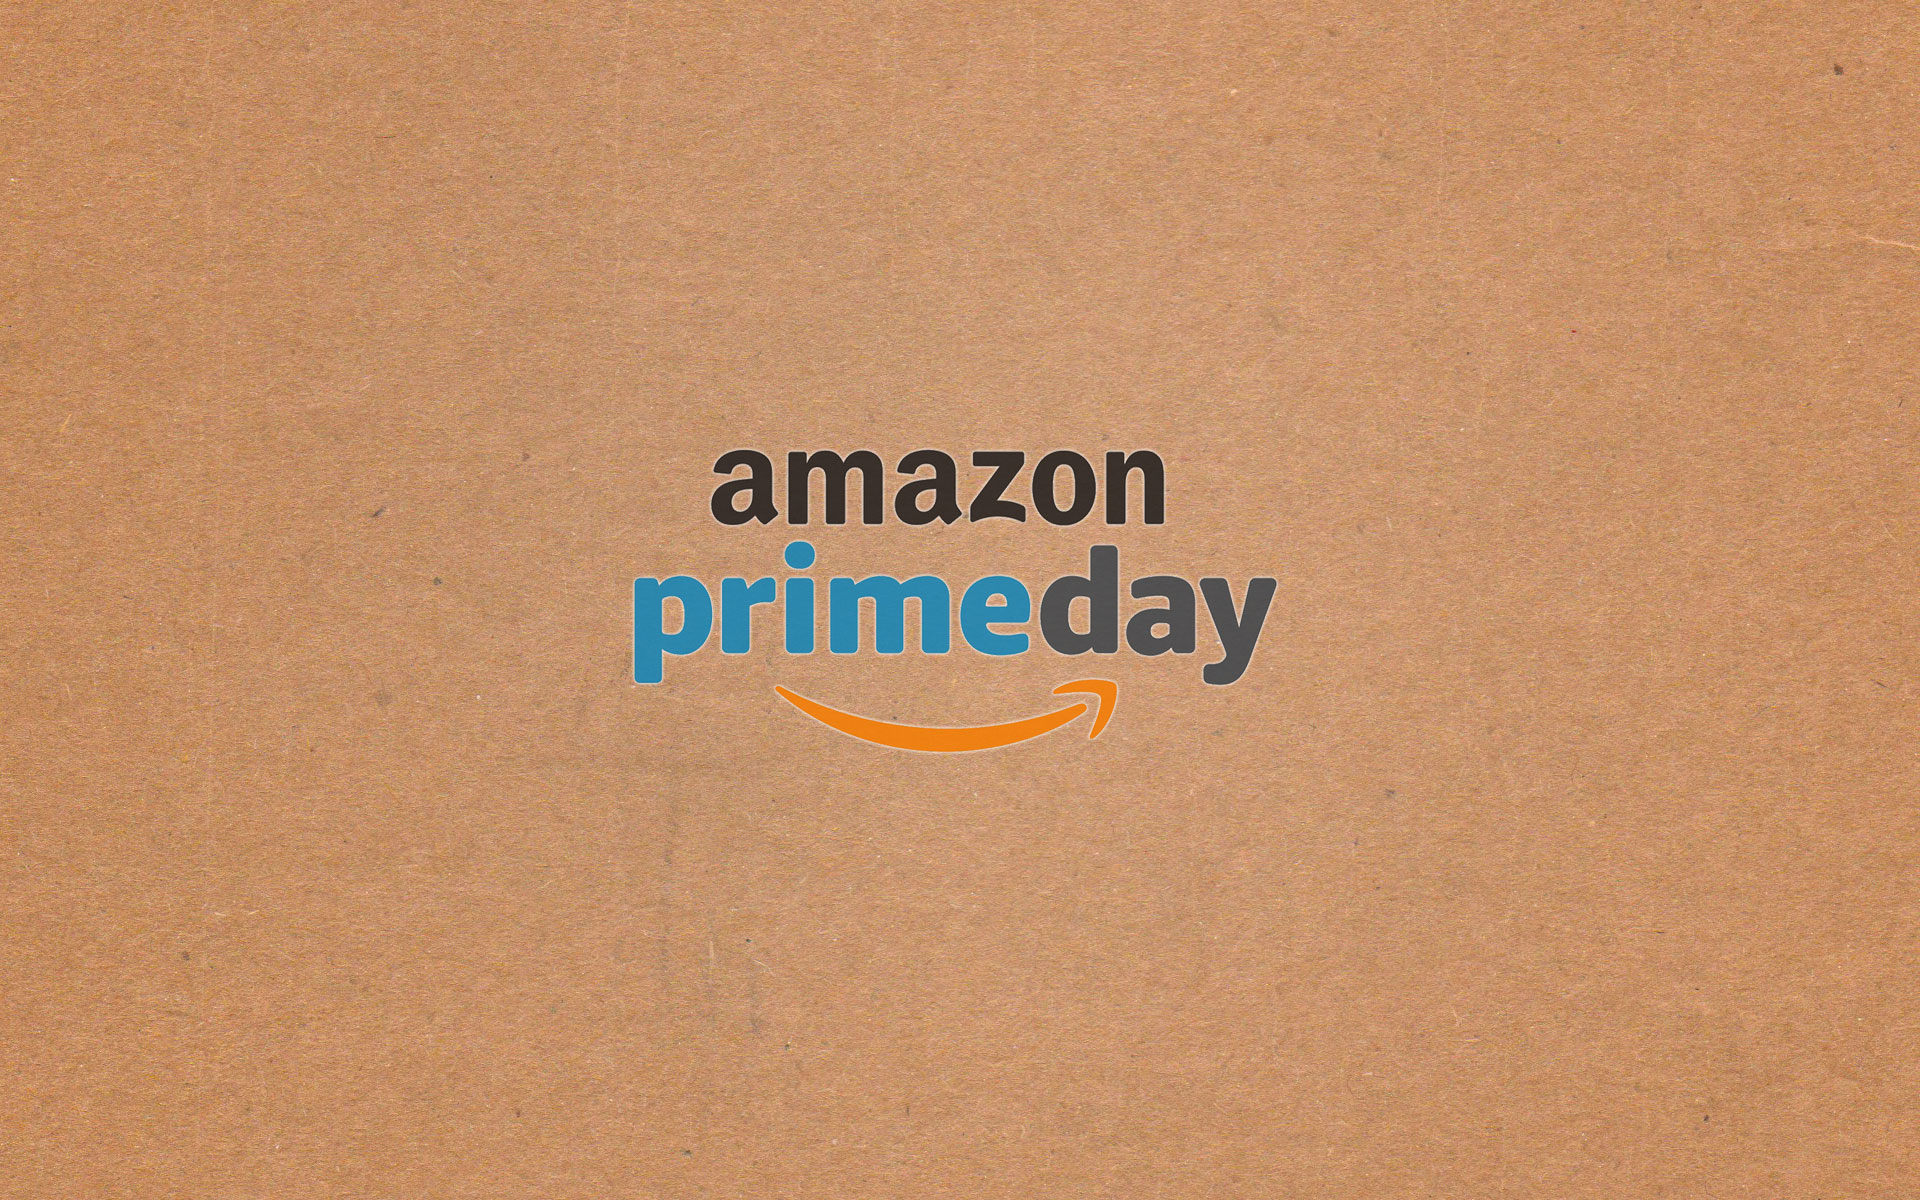 Amazon Prime Day by McFadyen